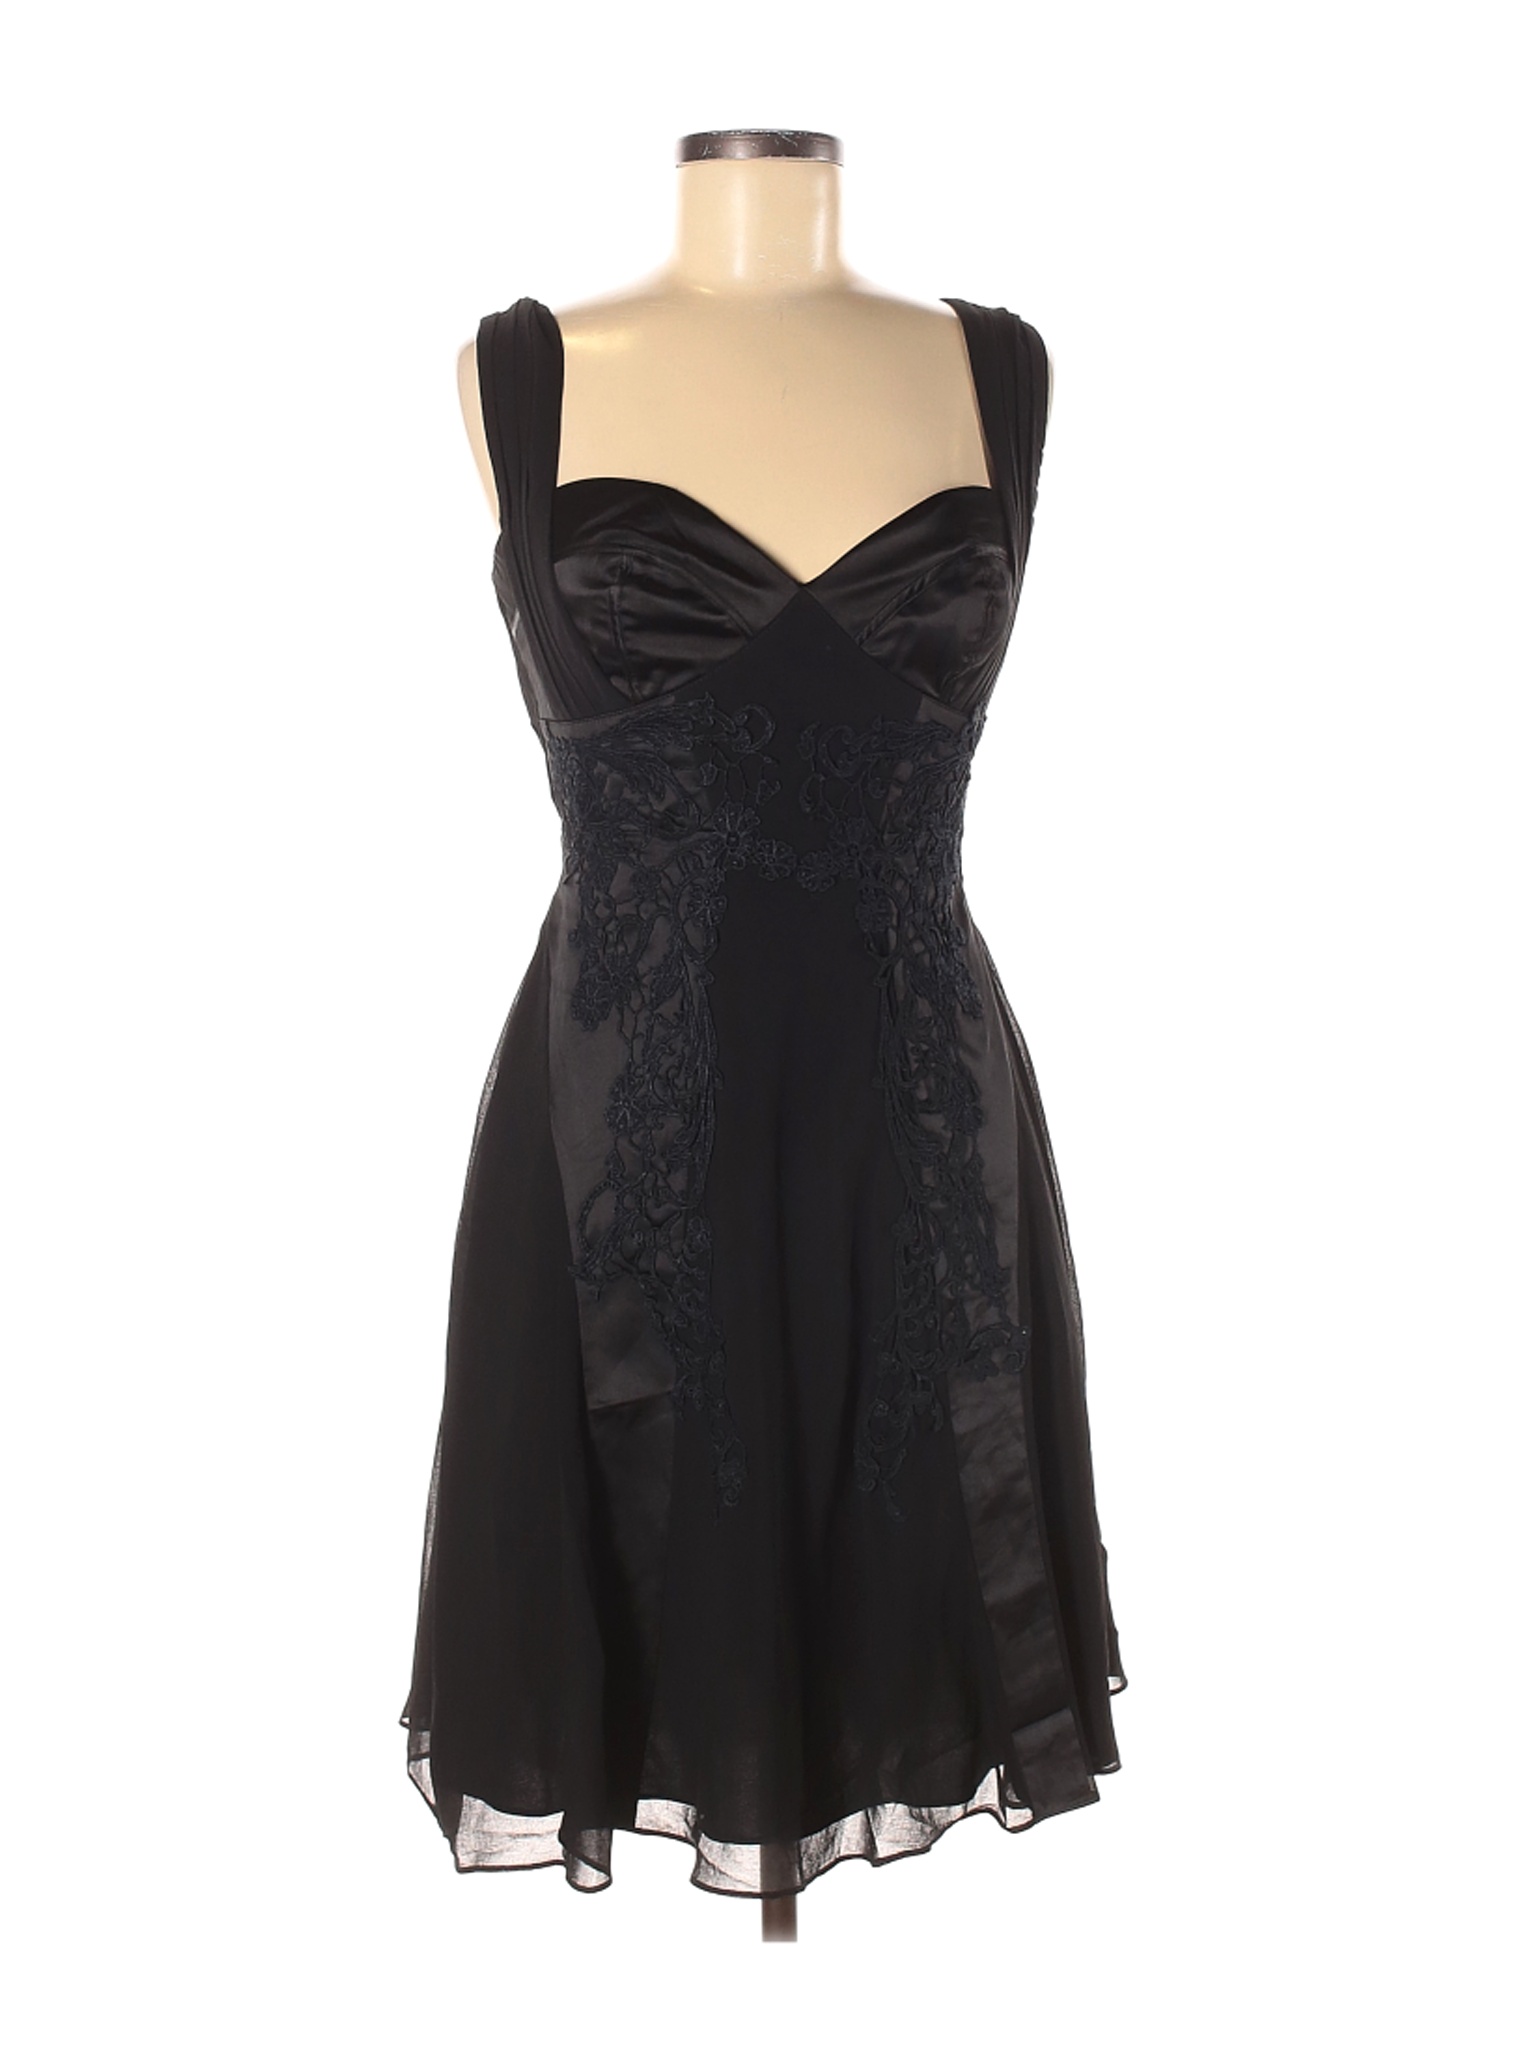 NWT Karen Millen Women Black Cocktail Dress 6 | eBay